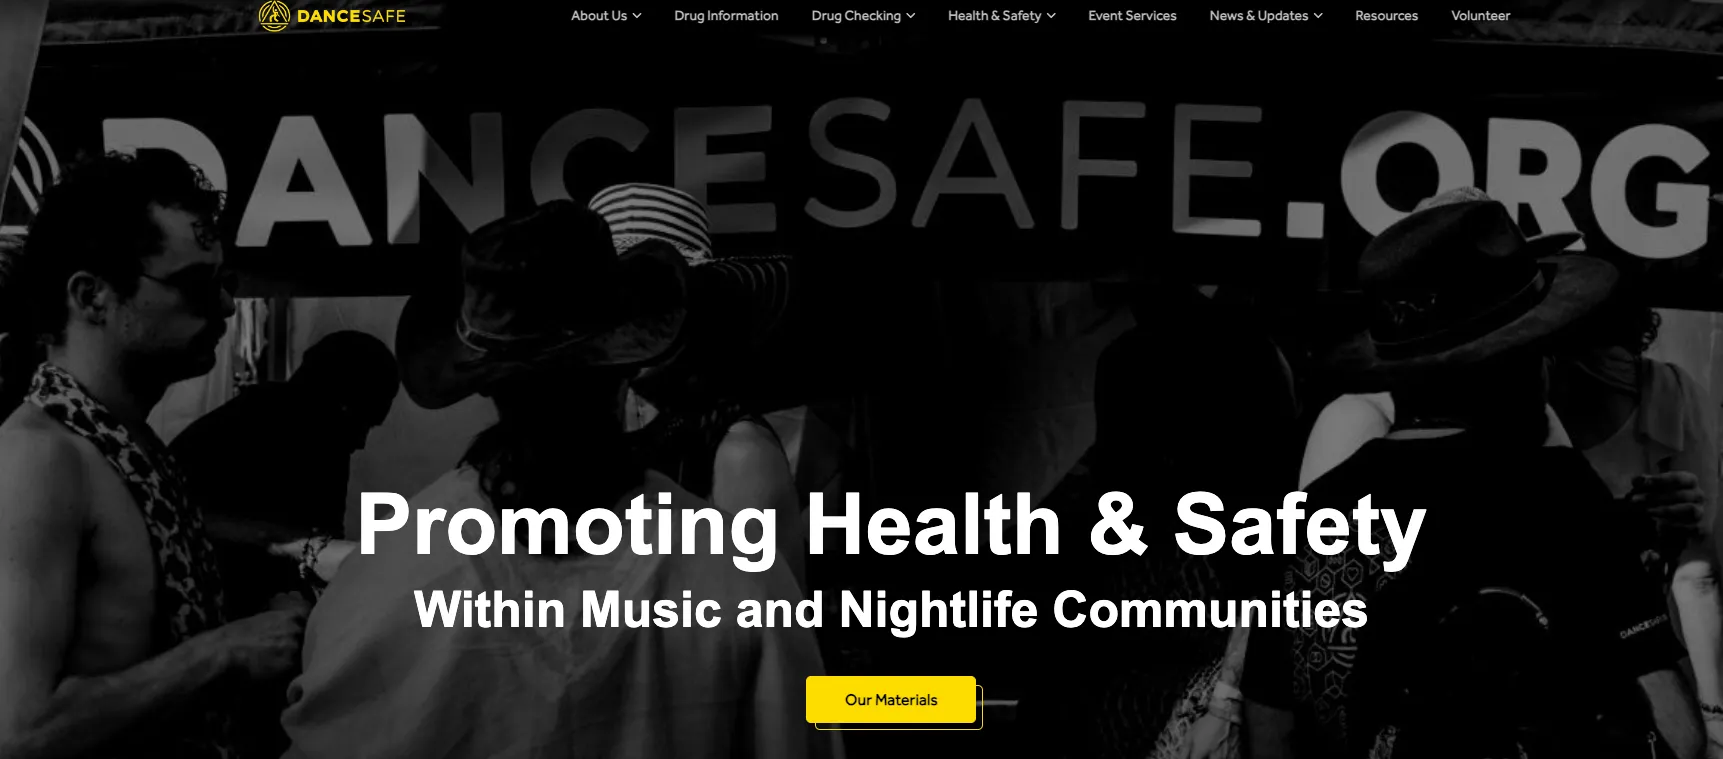 DanceSafe homepage